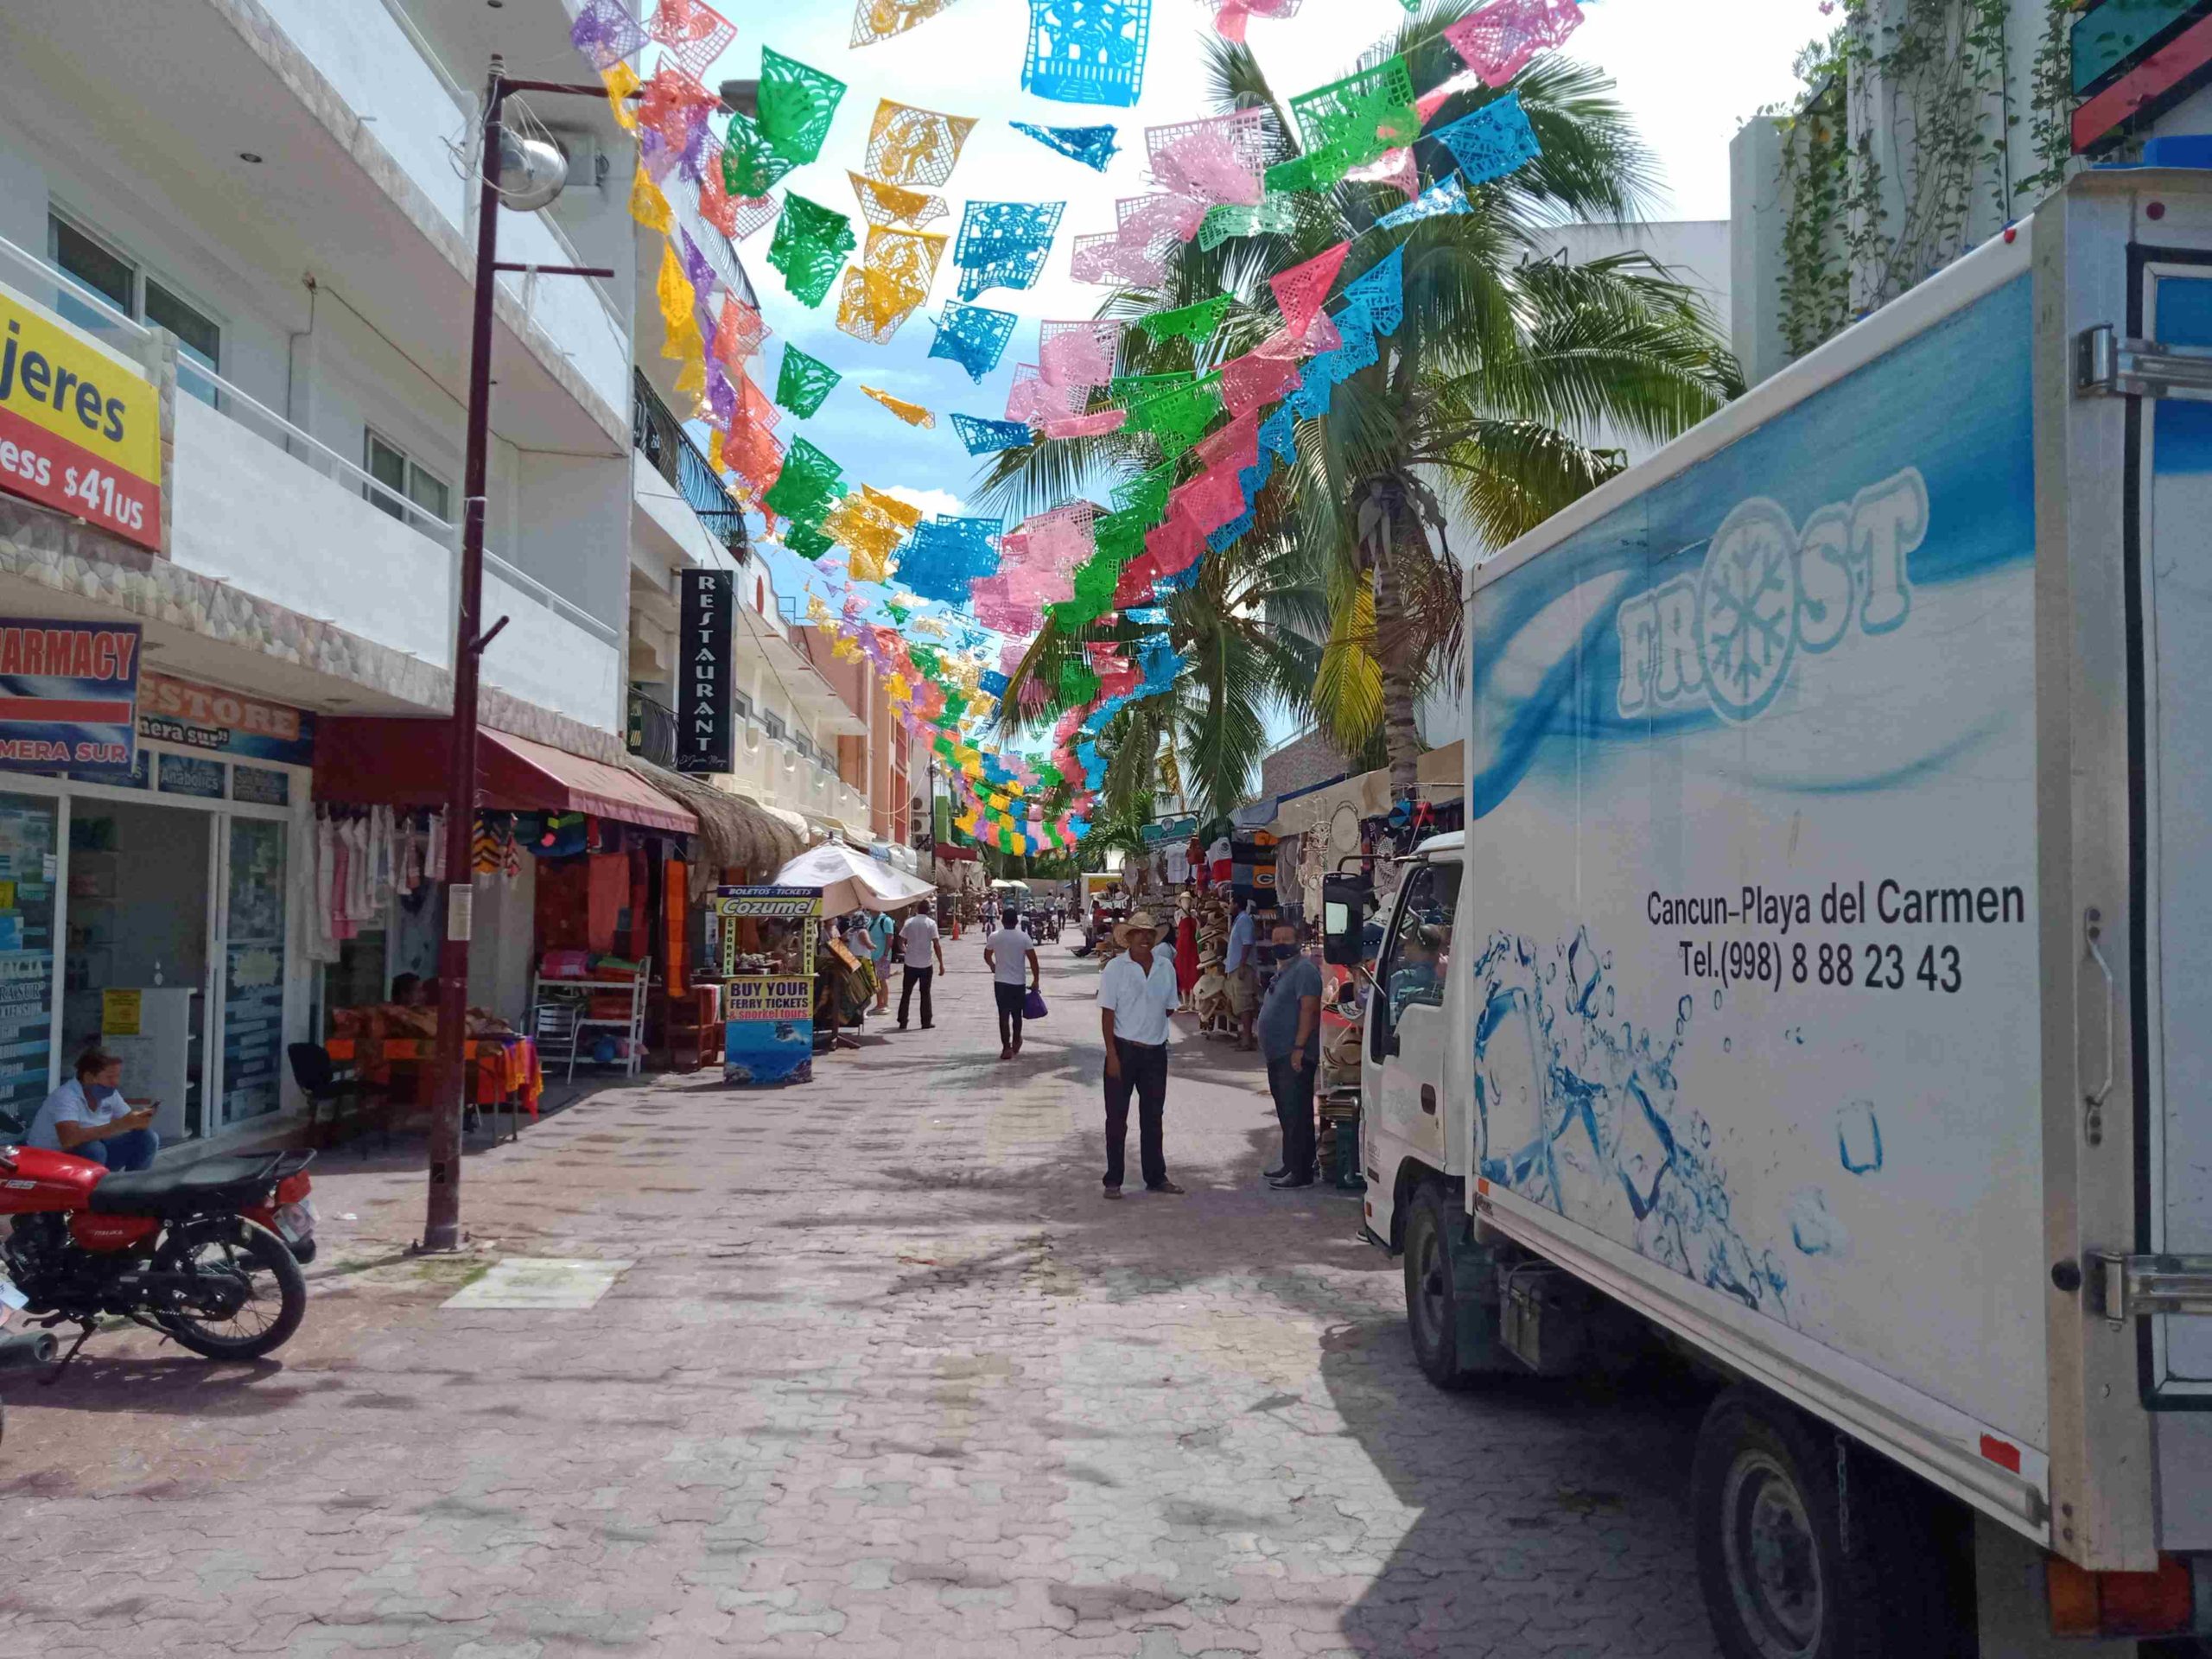 Streets in Playa del Carmen also called "Playa"